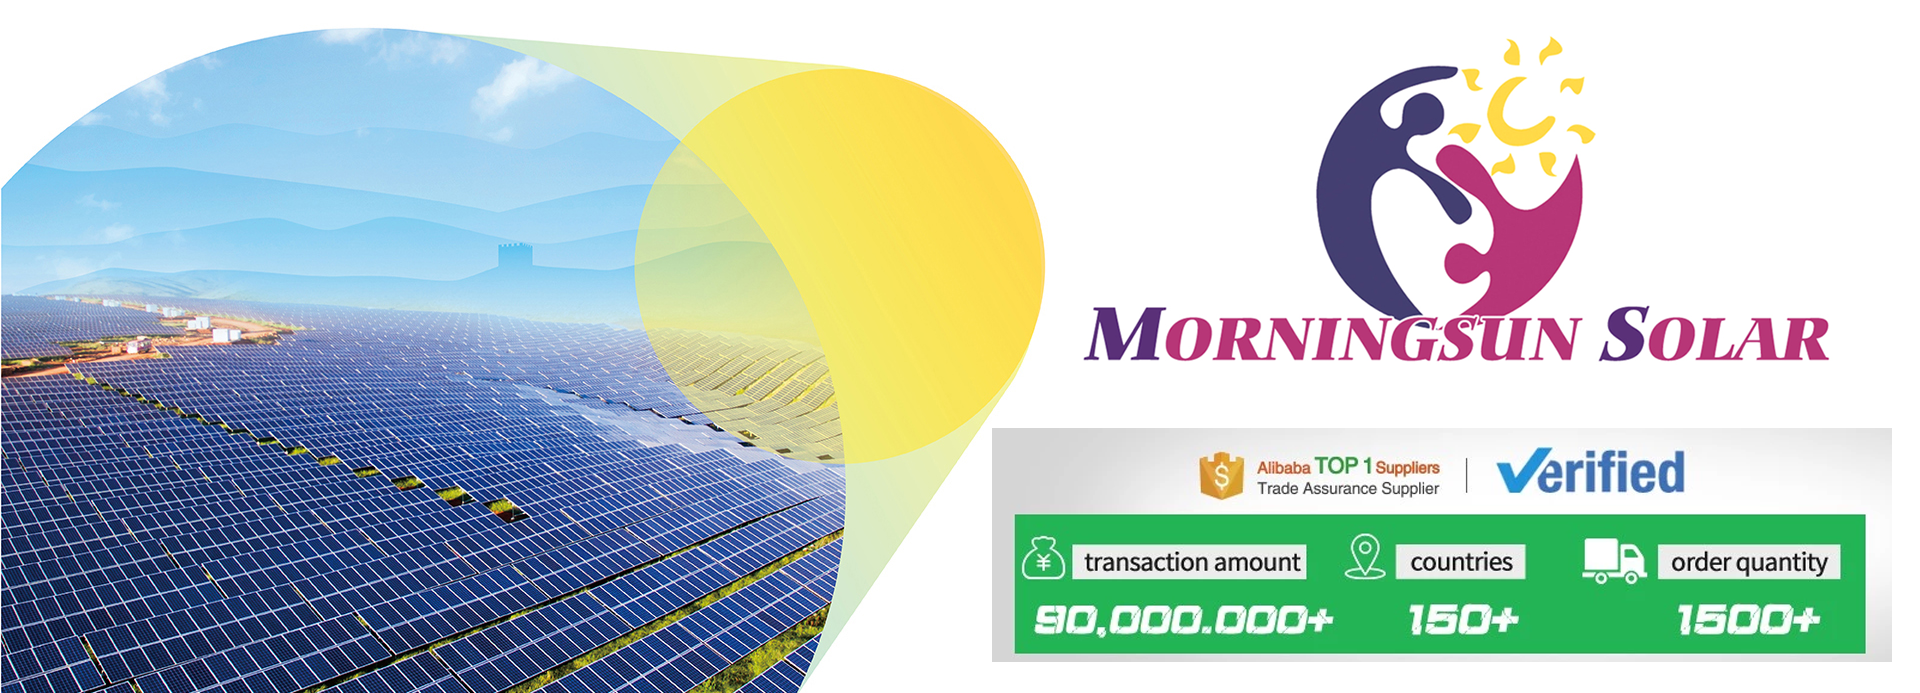 Solar panel 50w monocrystalline mono 30w